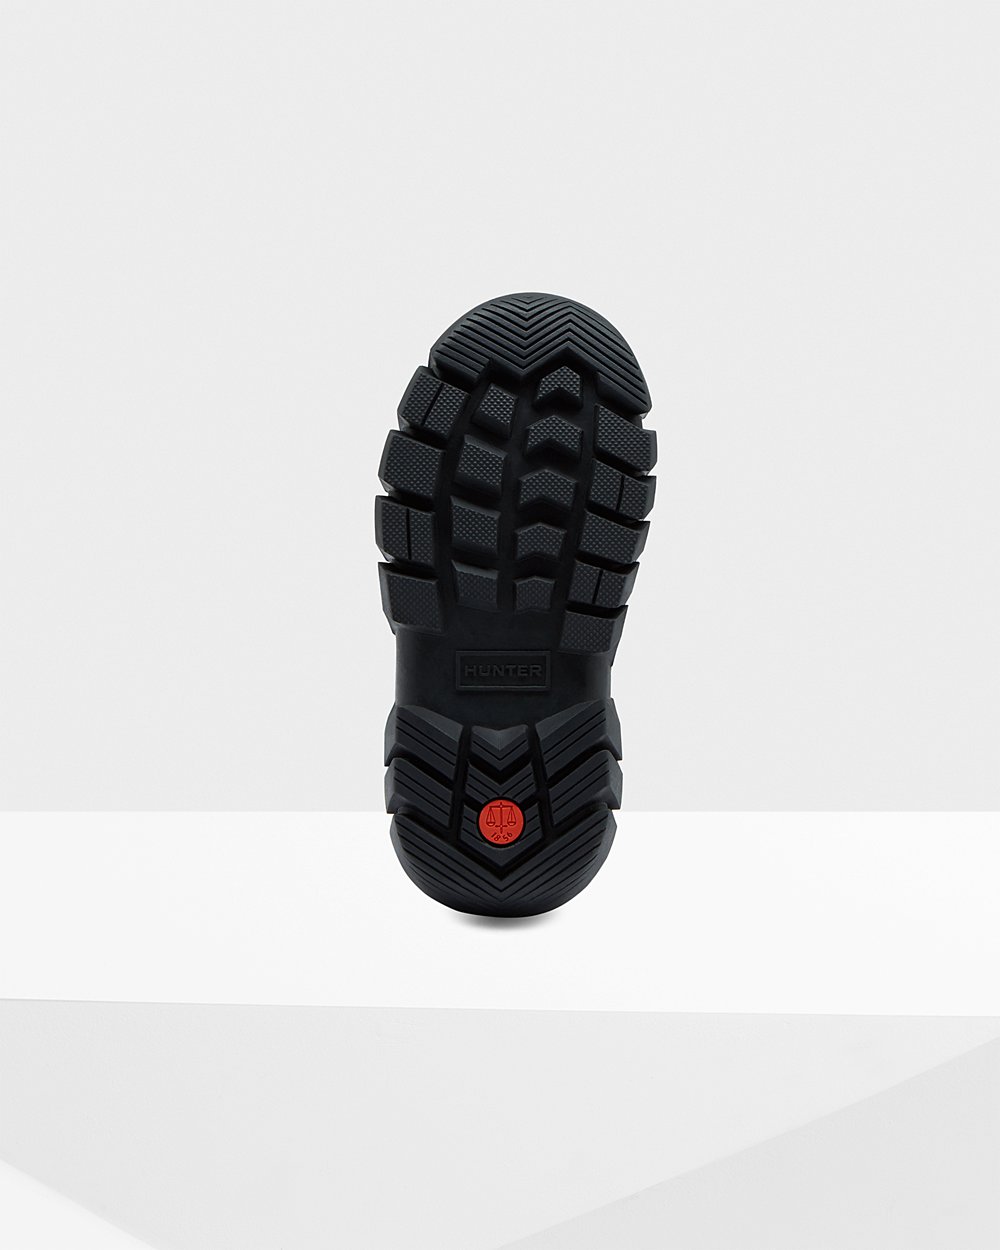 Kids Snow Boots - Hunter Original Little Insulated (17QEDAHWJ) - Navy/Black